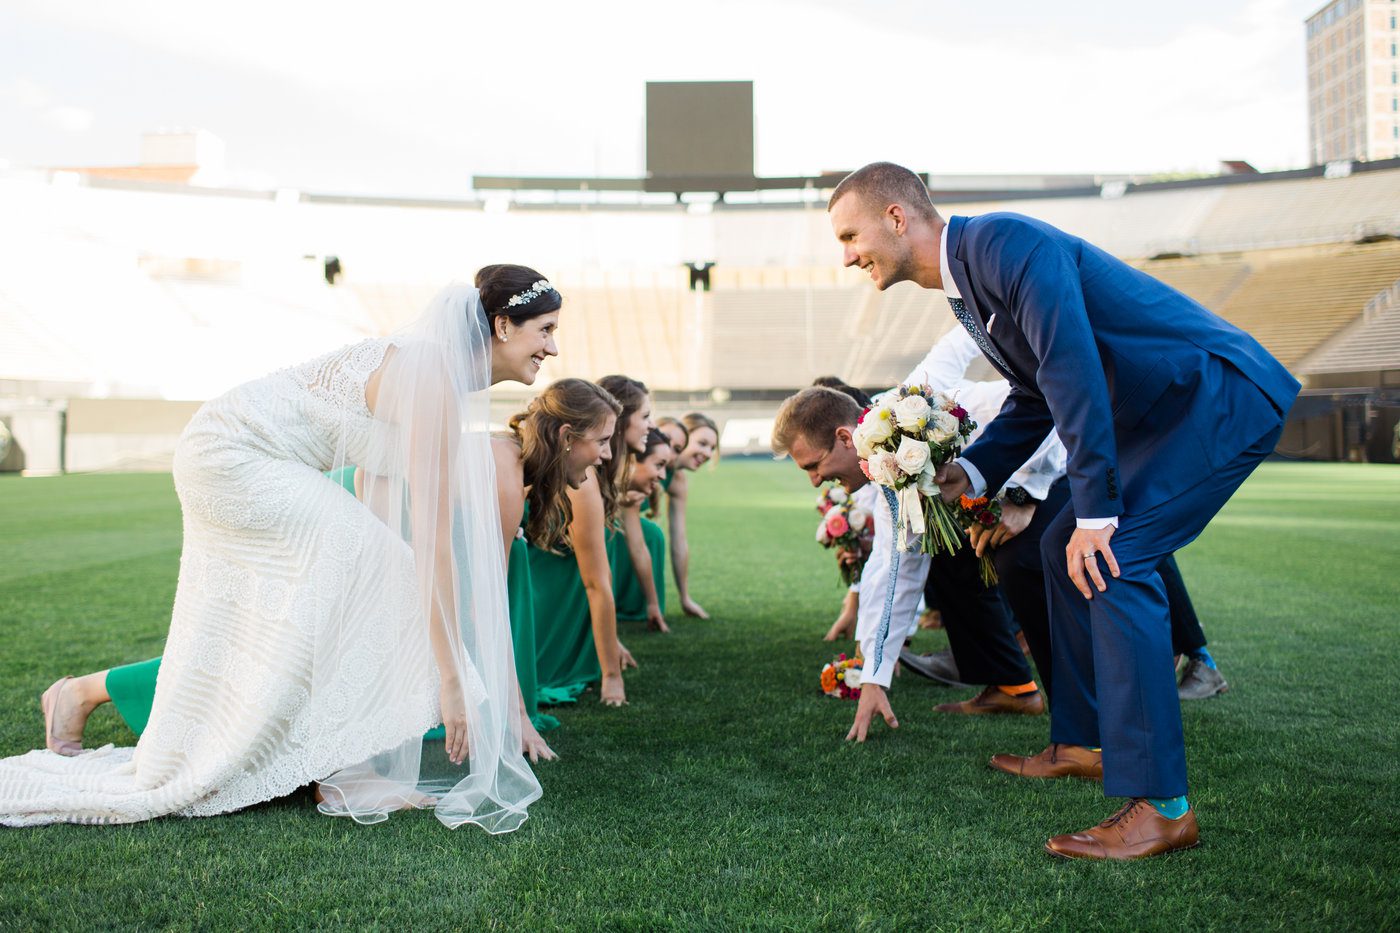 Fun football field wedding photos